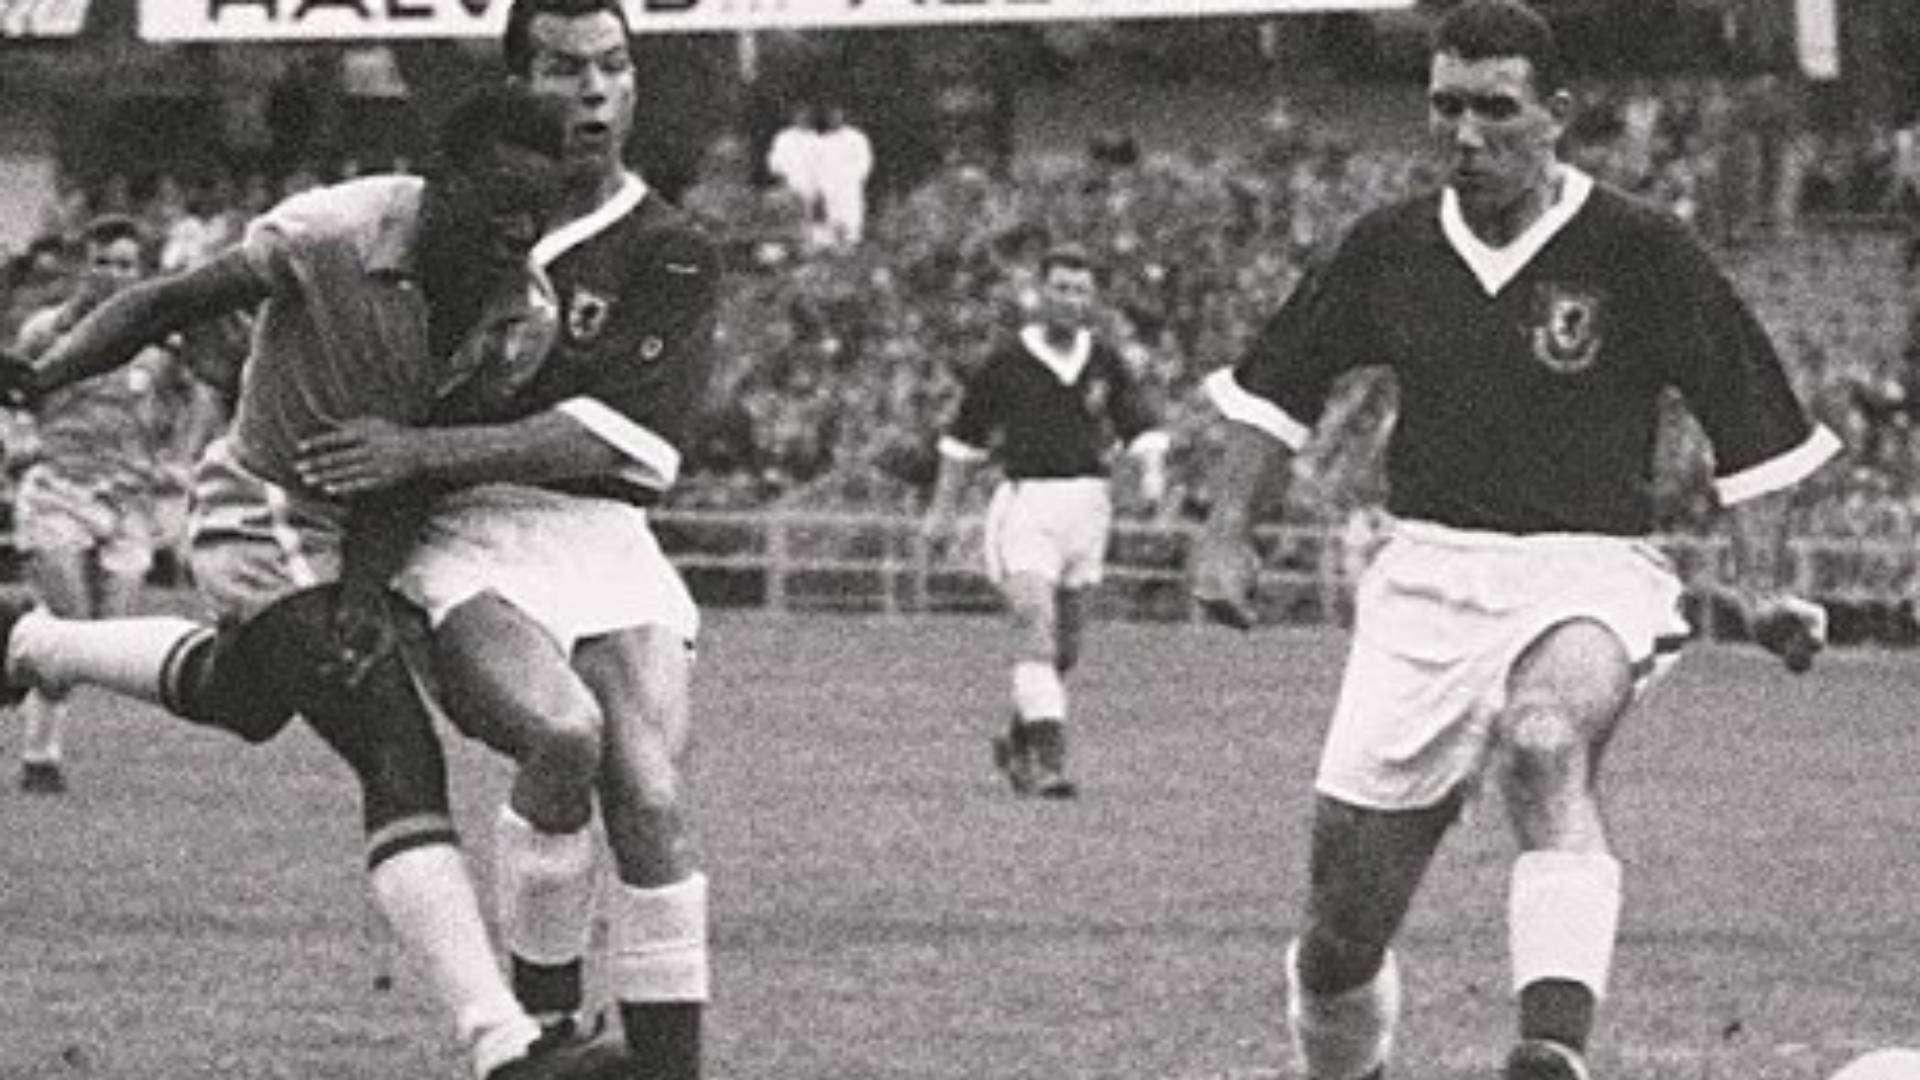 Copa de 1958, Brasil x País de Gales, Pelé